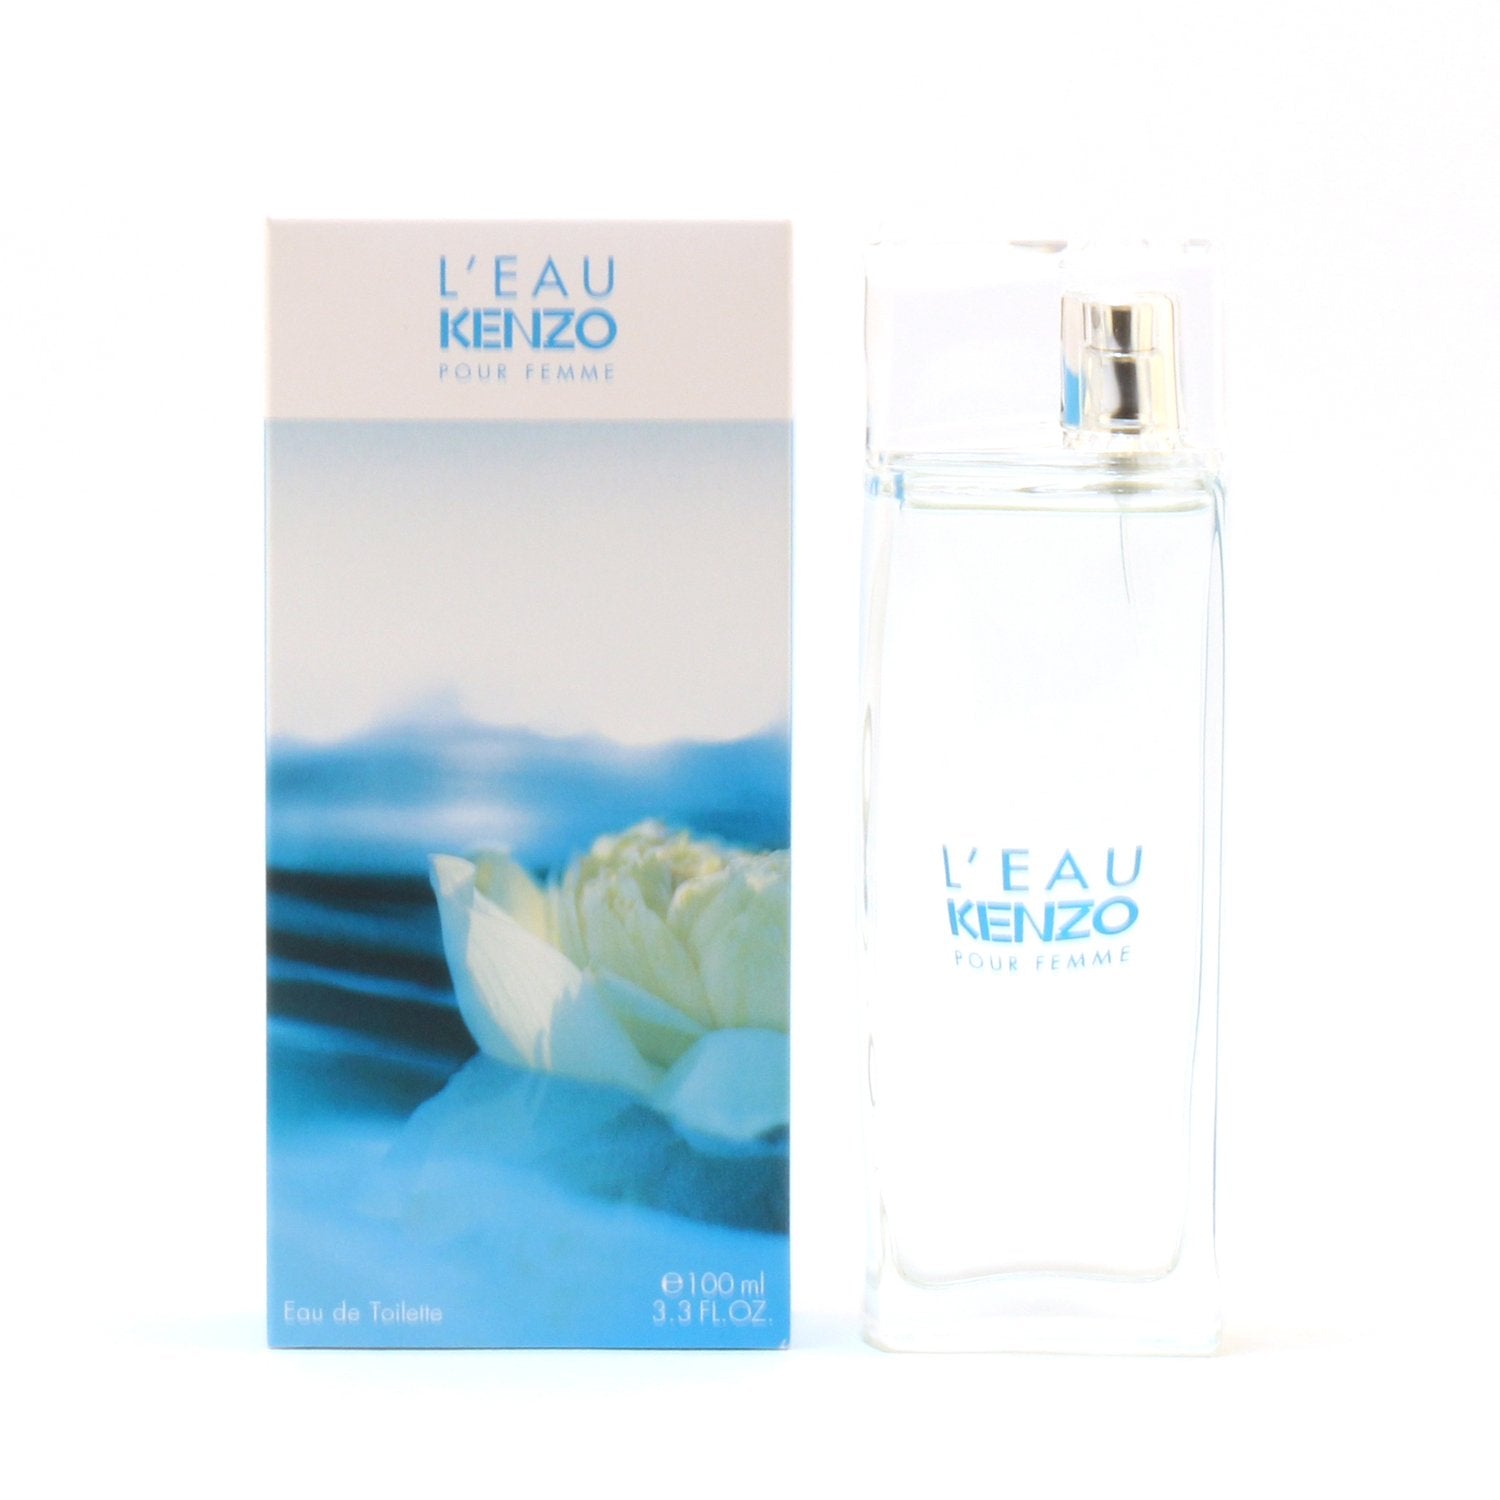 Perfume - L'EAU KENZO POUR FEMME BY KENZO - EAU DE TOILETTE SPRAY, 3.3 OZ